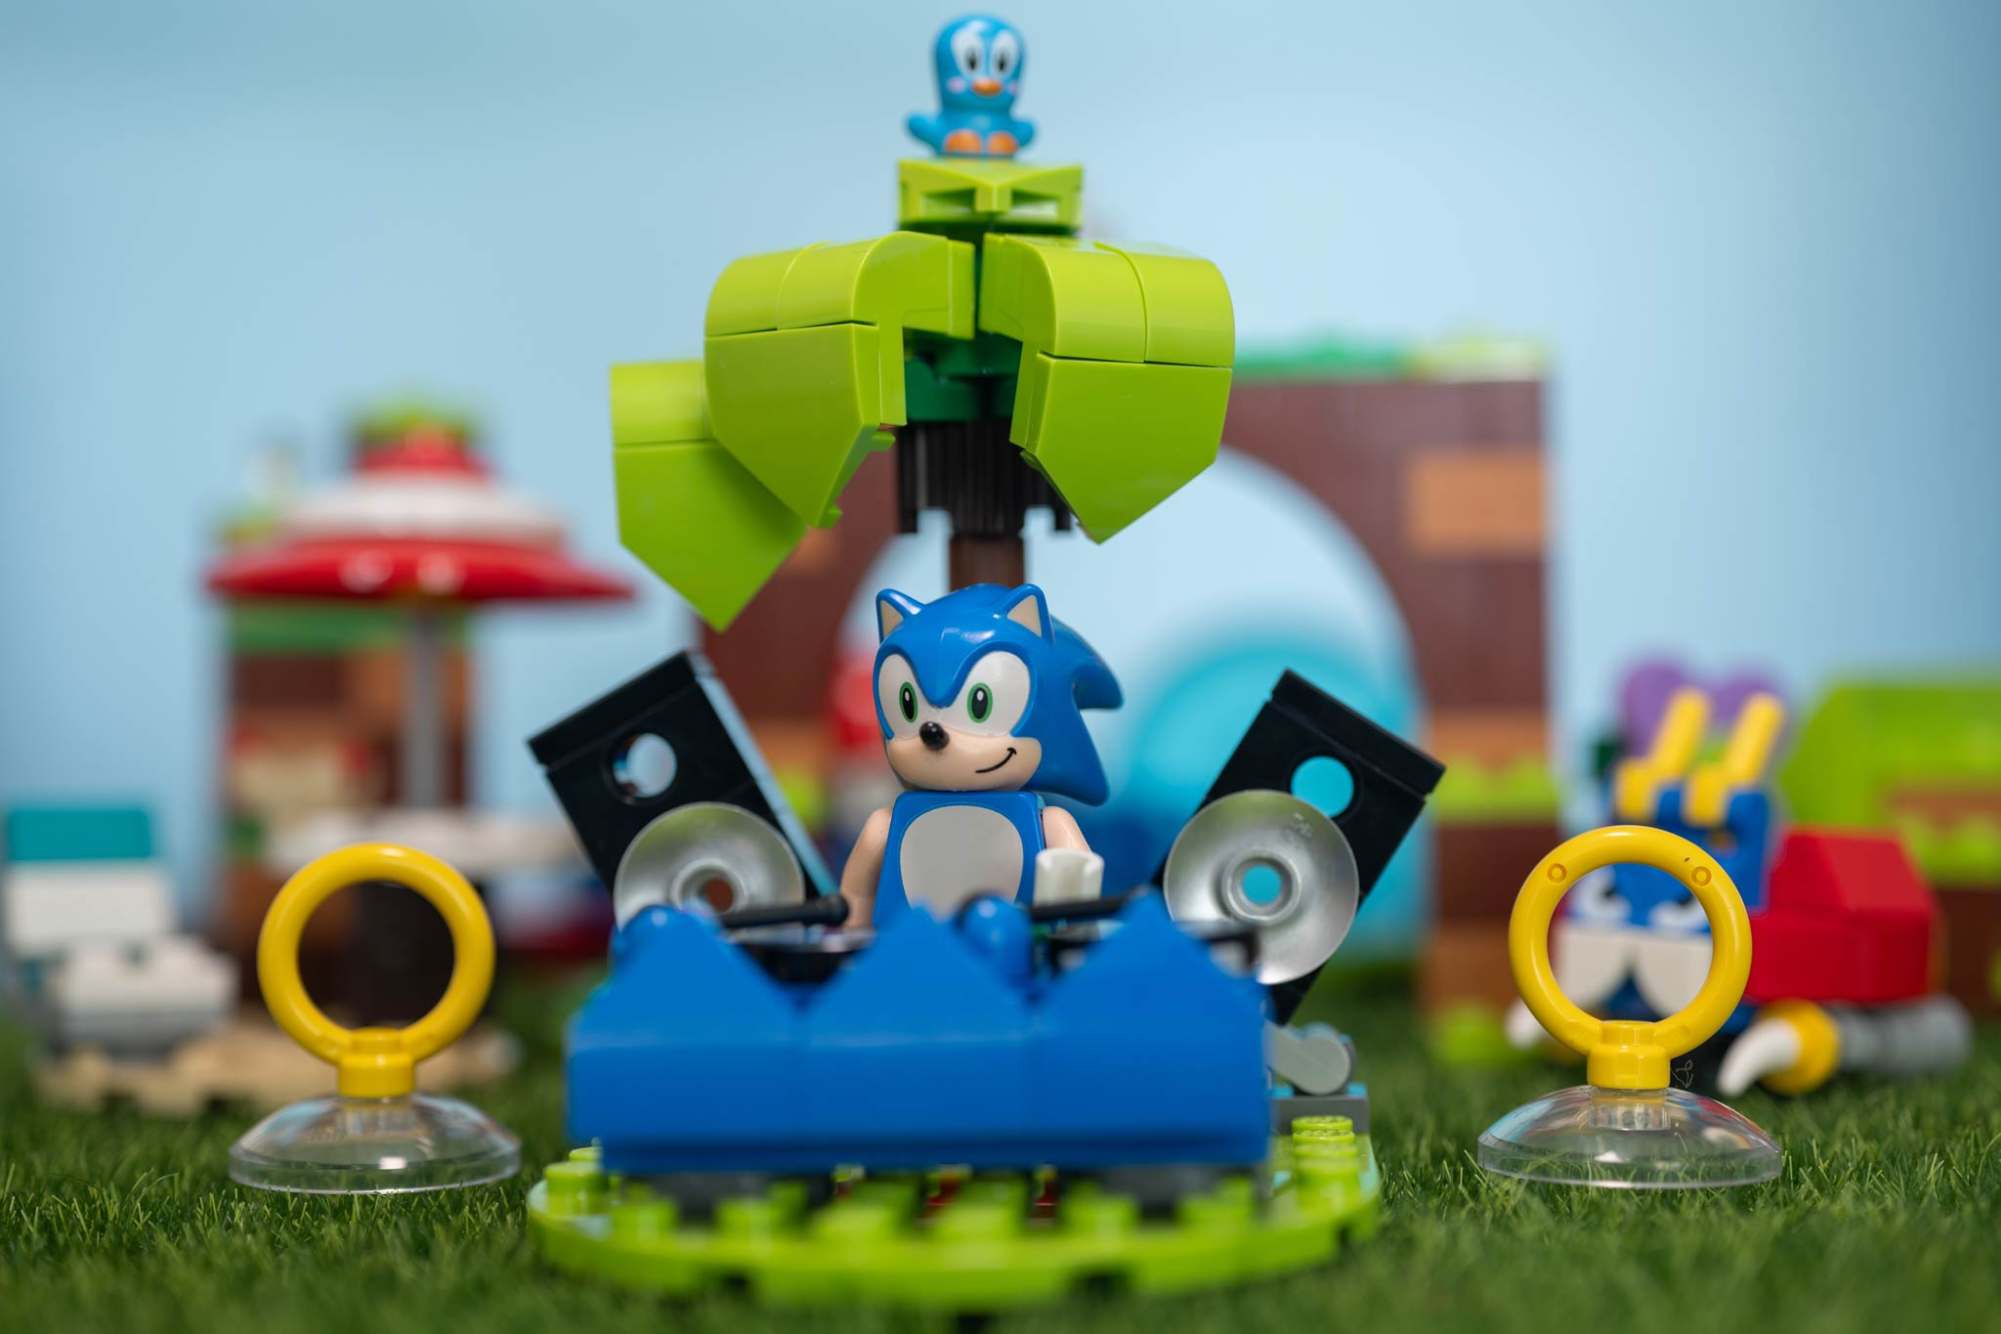 LEGO Sonic the Hedgehog Sonic's Speed Sphere Challenge (76990